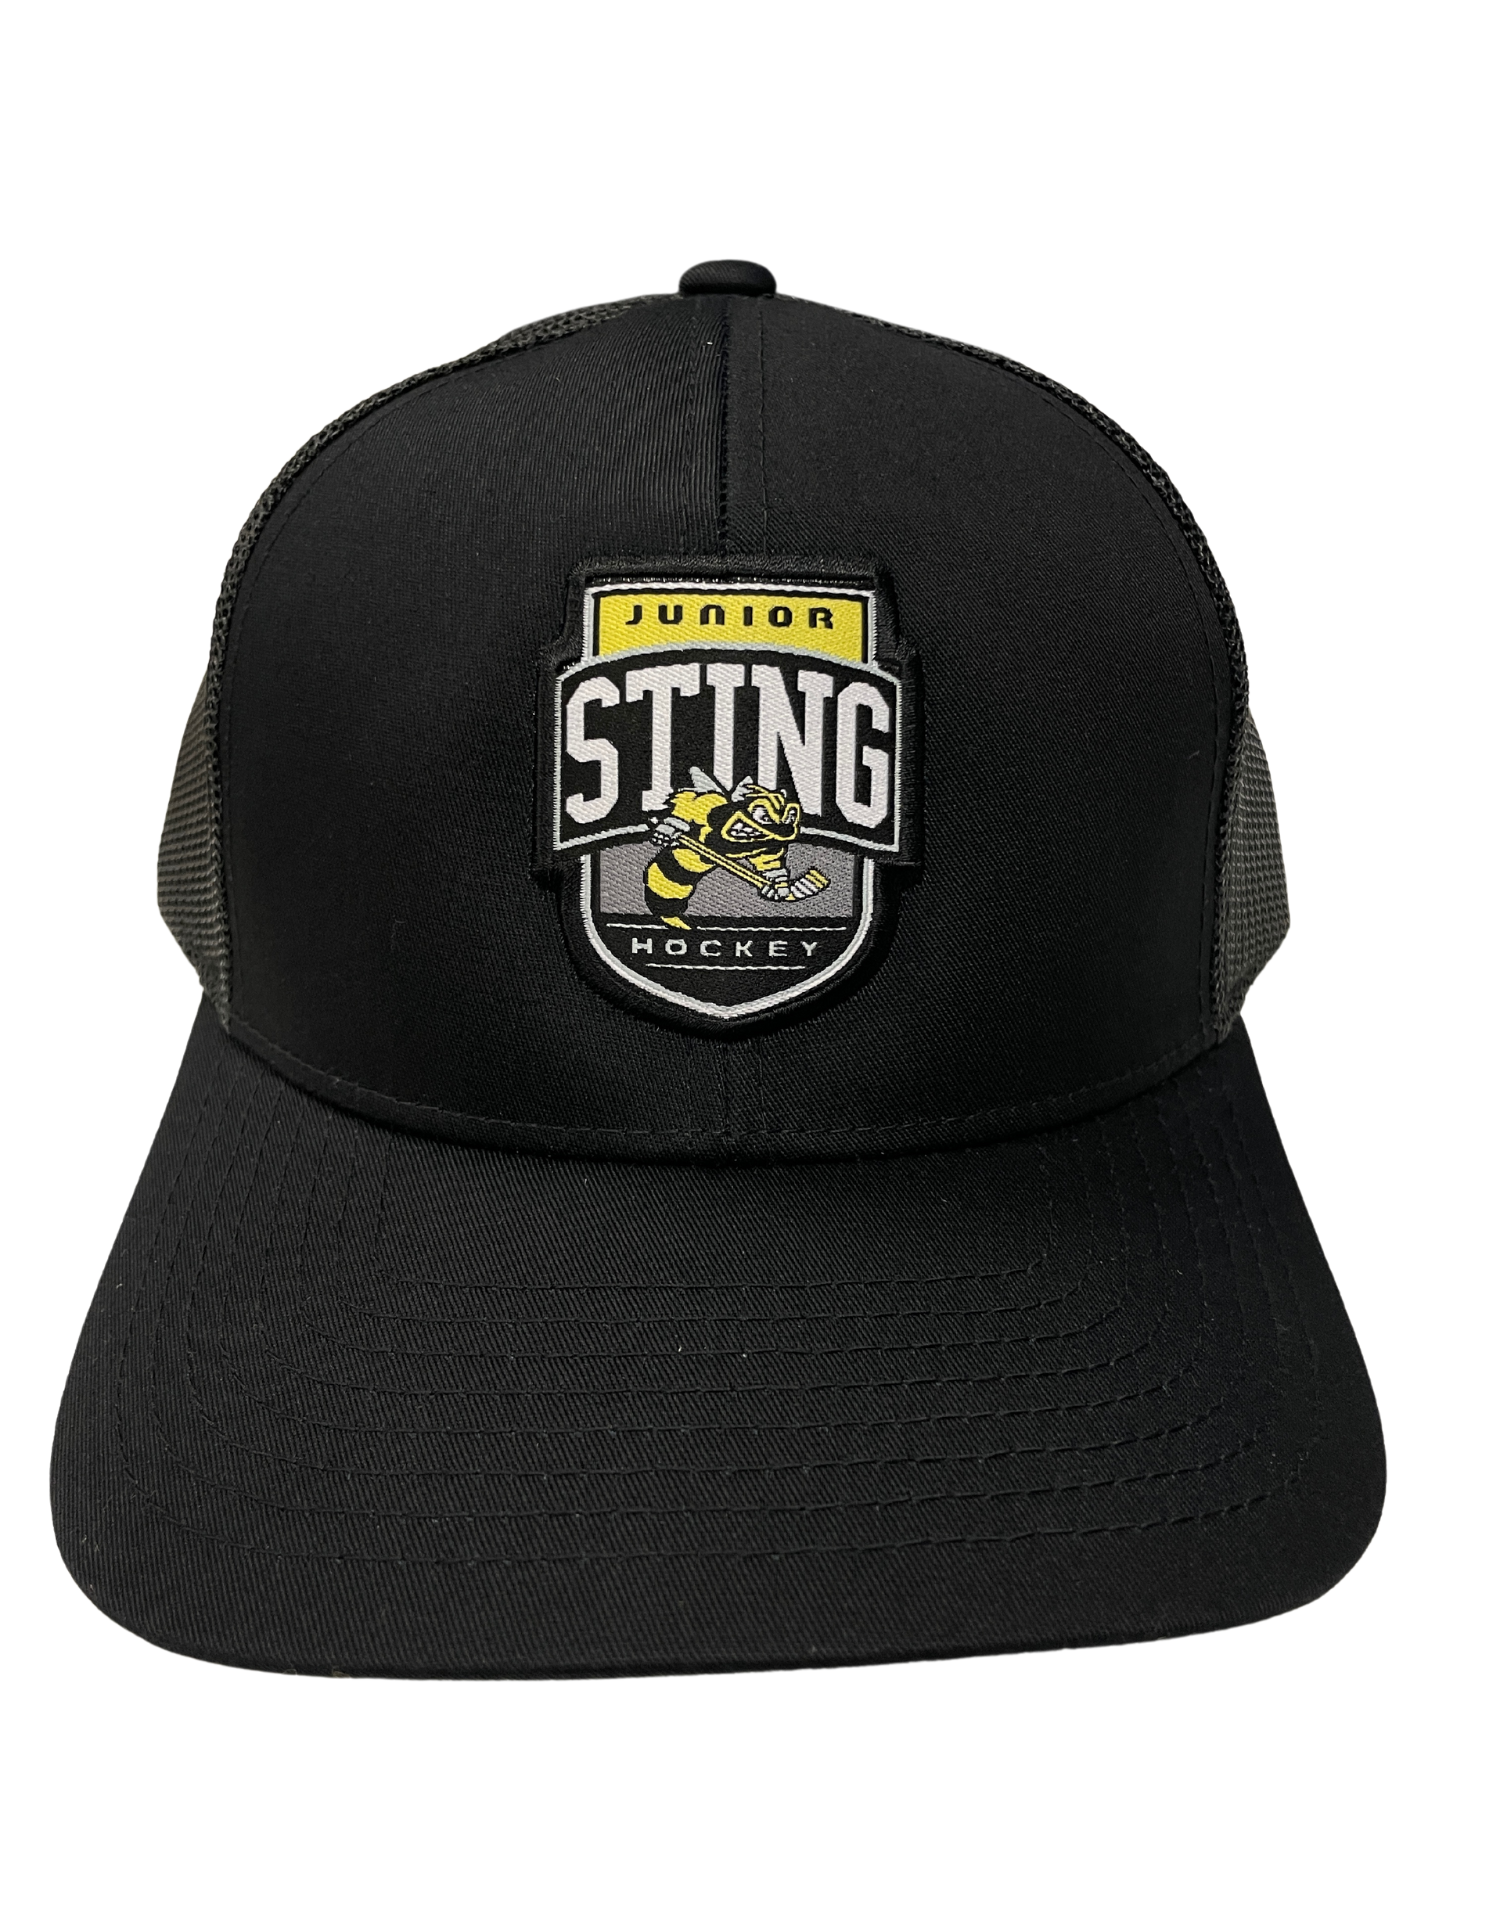 Jr. Sting Baseball Hat